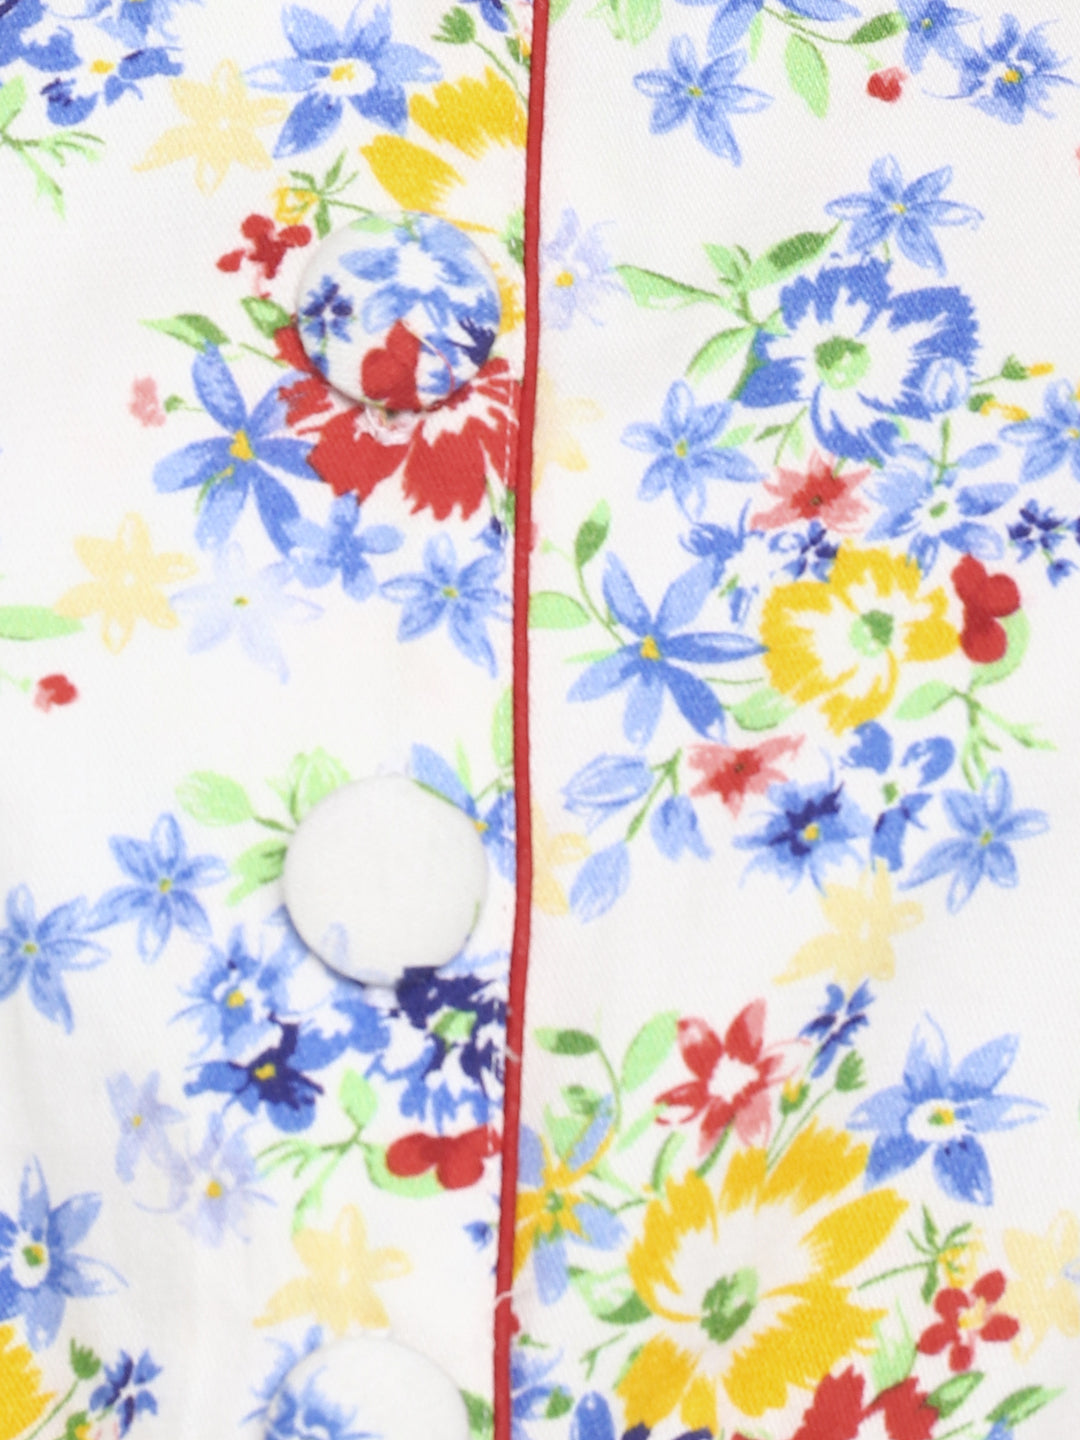 Blanc9 Floral Printed Top & Skirt Coord Set-B9ST44